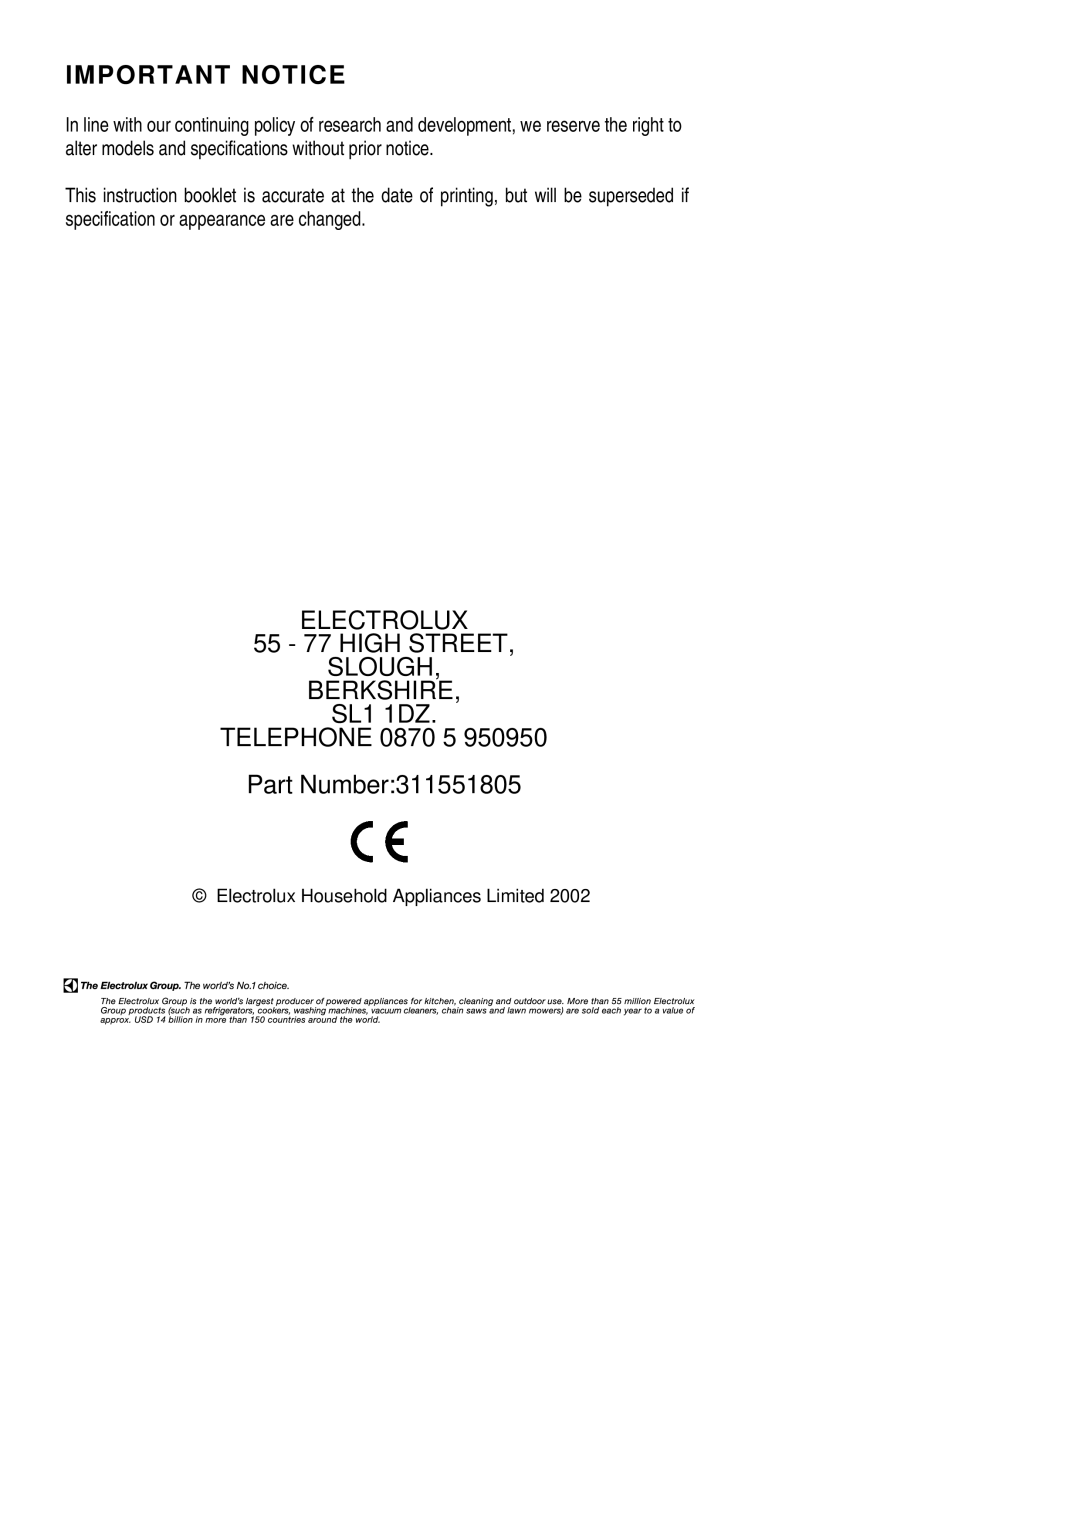 Electrolux DDO60GA manual Important Notice, ELECTROLUX 55 - 77 HIGH STREET SLOUGH BERKSHIRE SL1 1DZ 